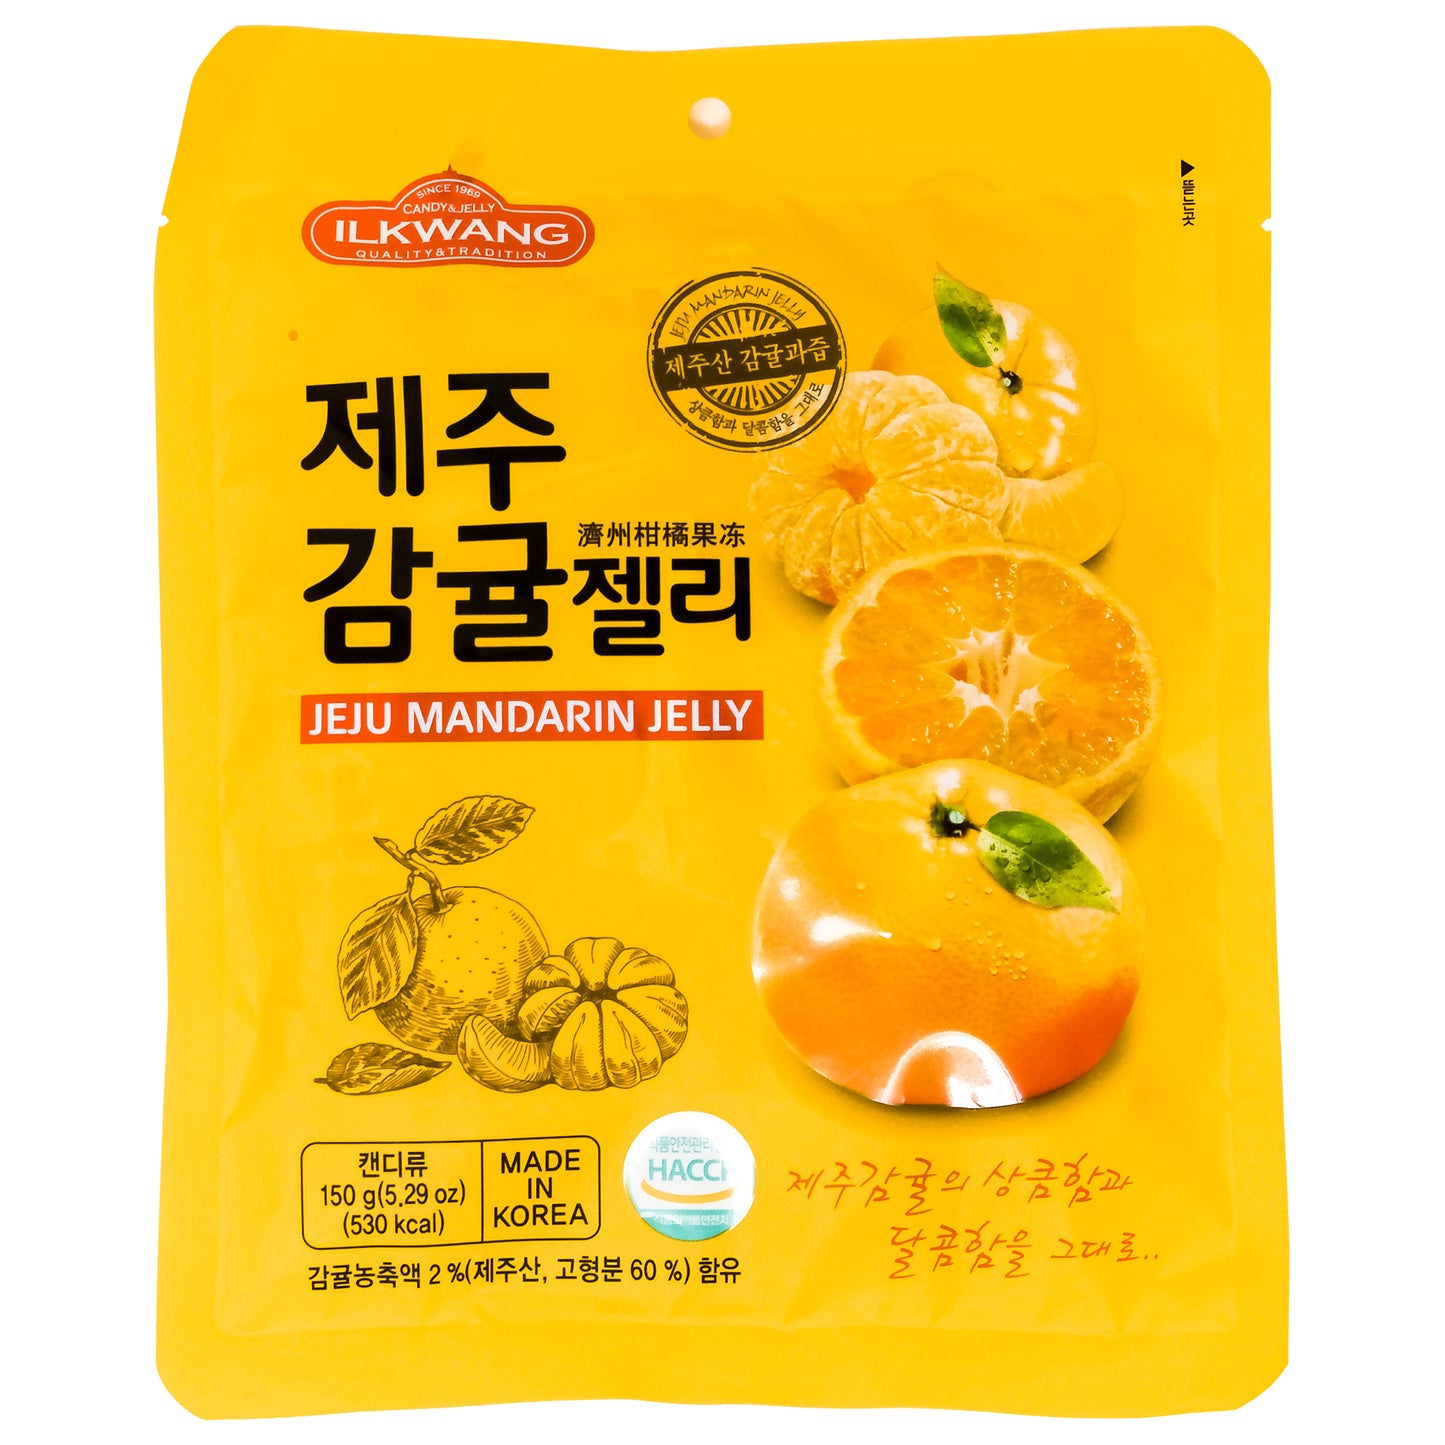 KOREA  Jeju Mandarin Jelly Candy 5.29 oz /150g (Ilkwang) x 3, 4, 5